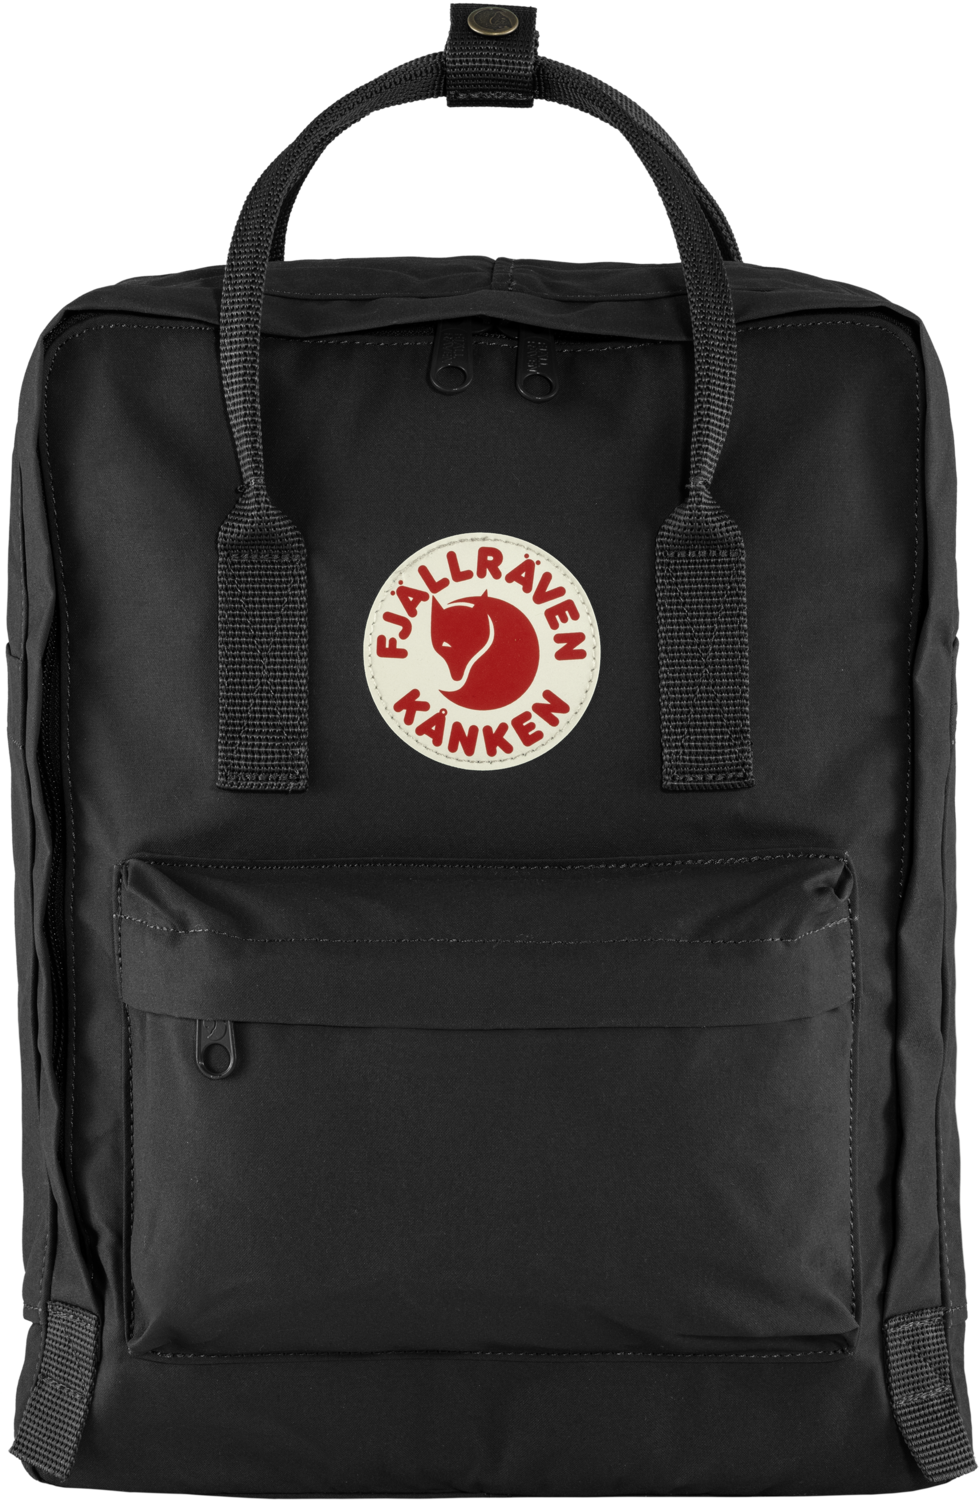 Leather Backpack Women's Backpack Black Backpack Small -  Sweden